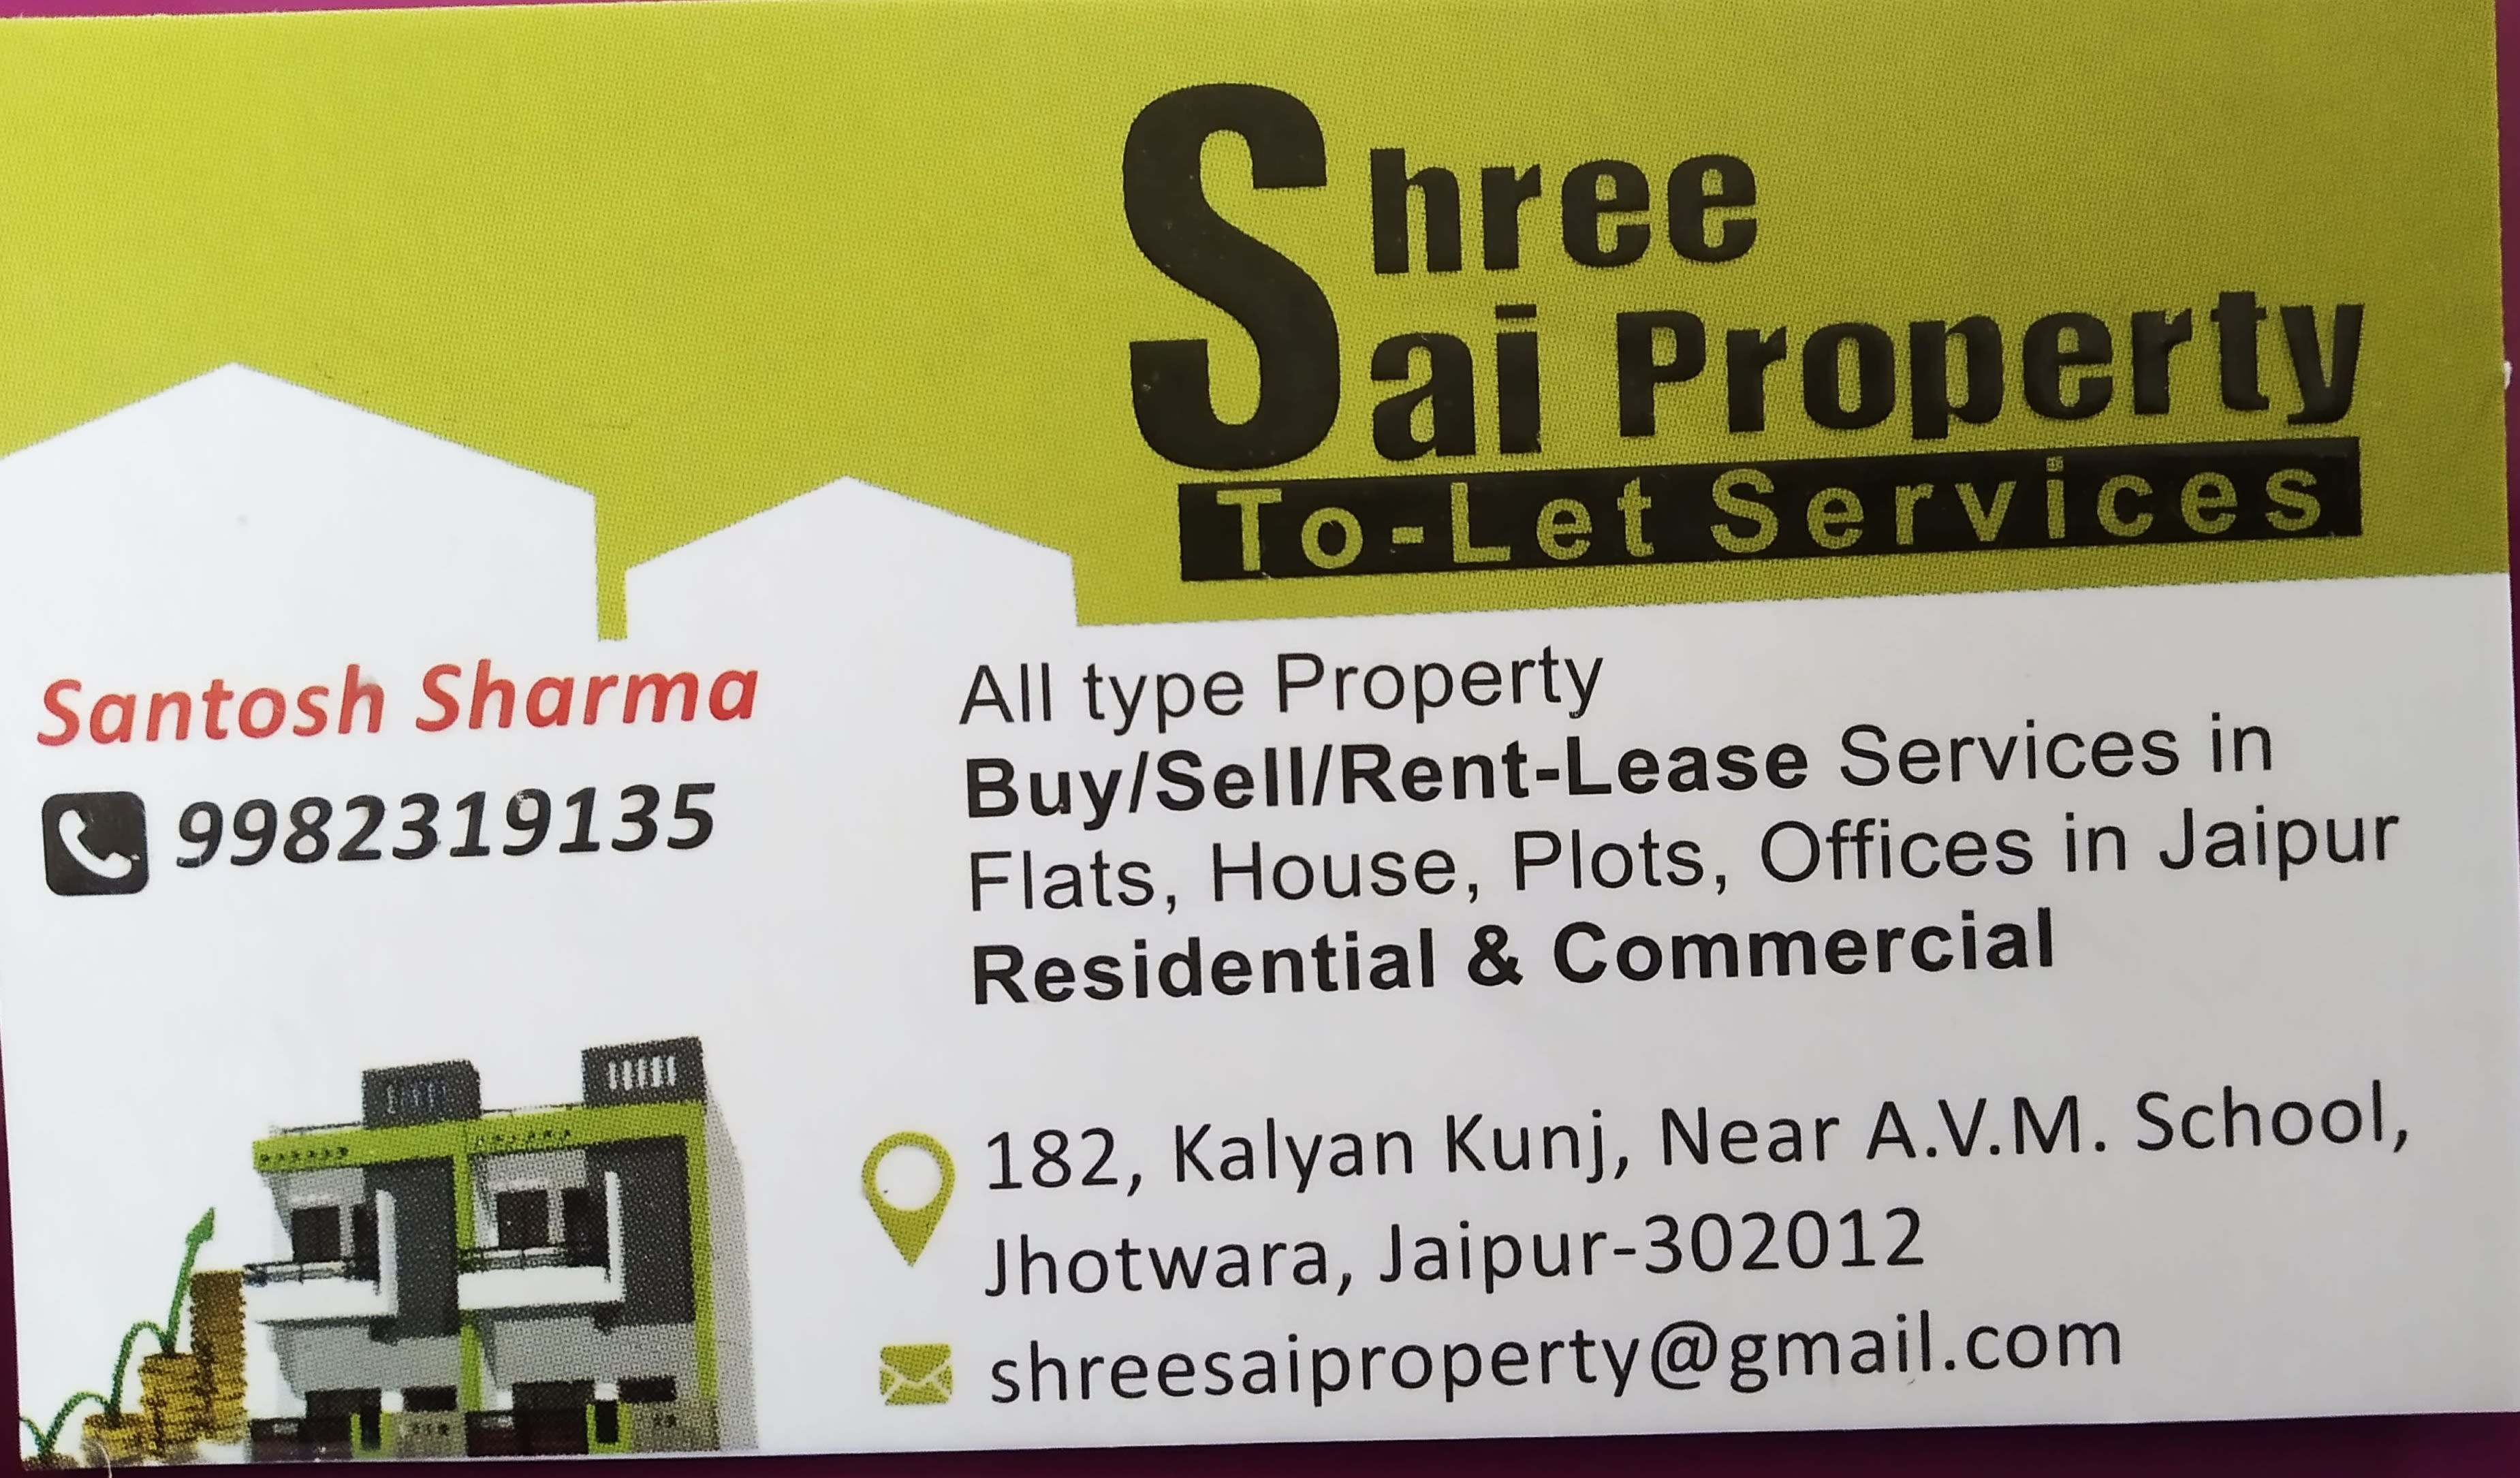 Shree Sai Property & To Let Service